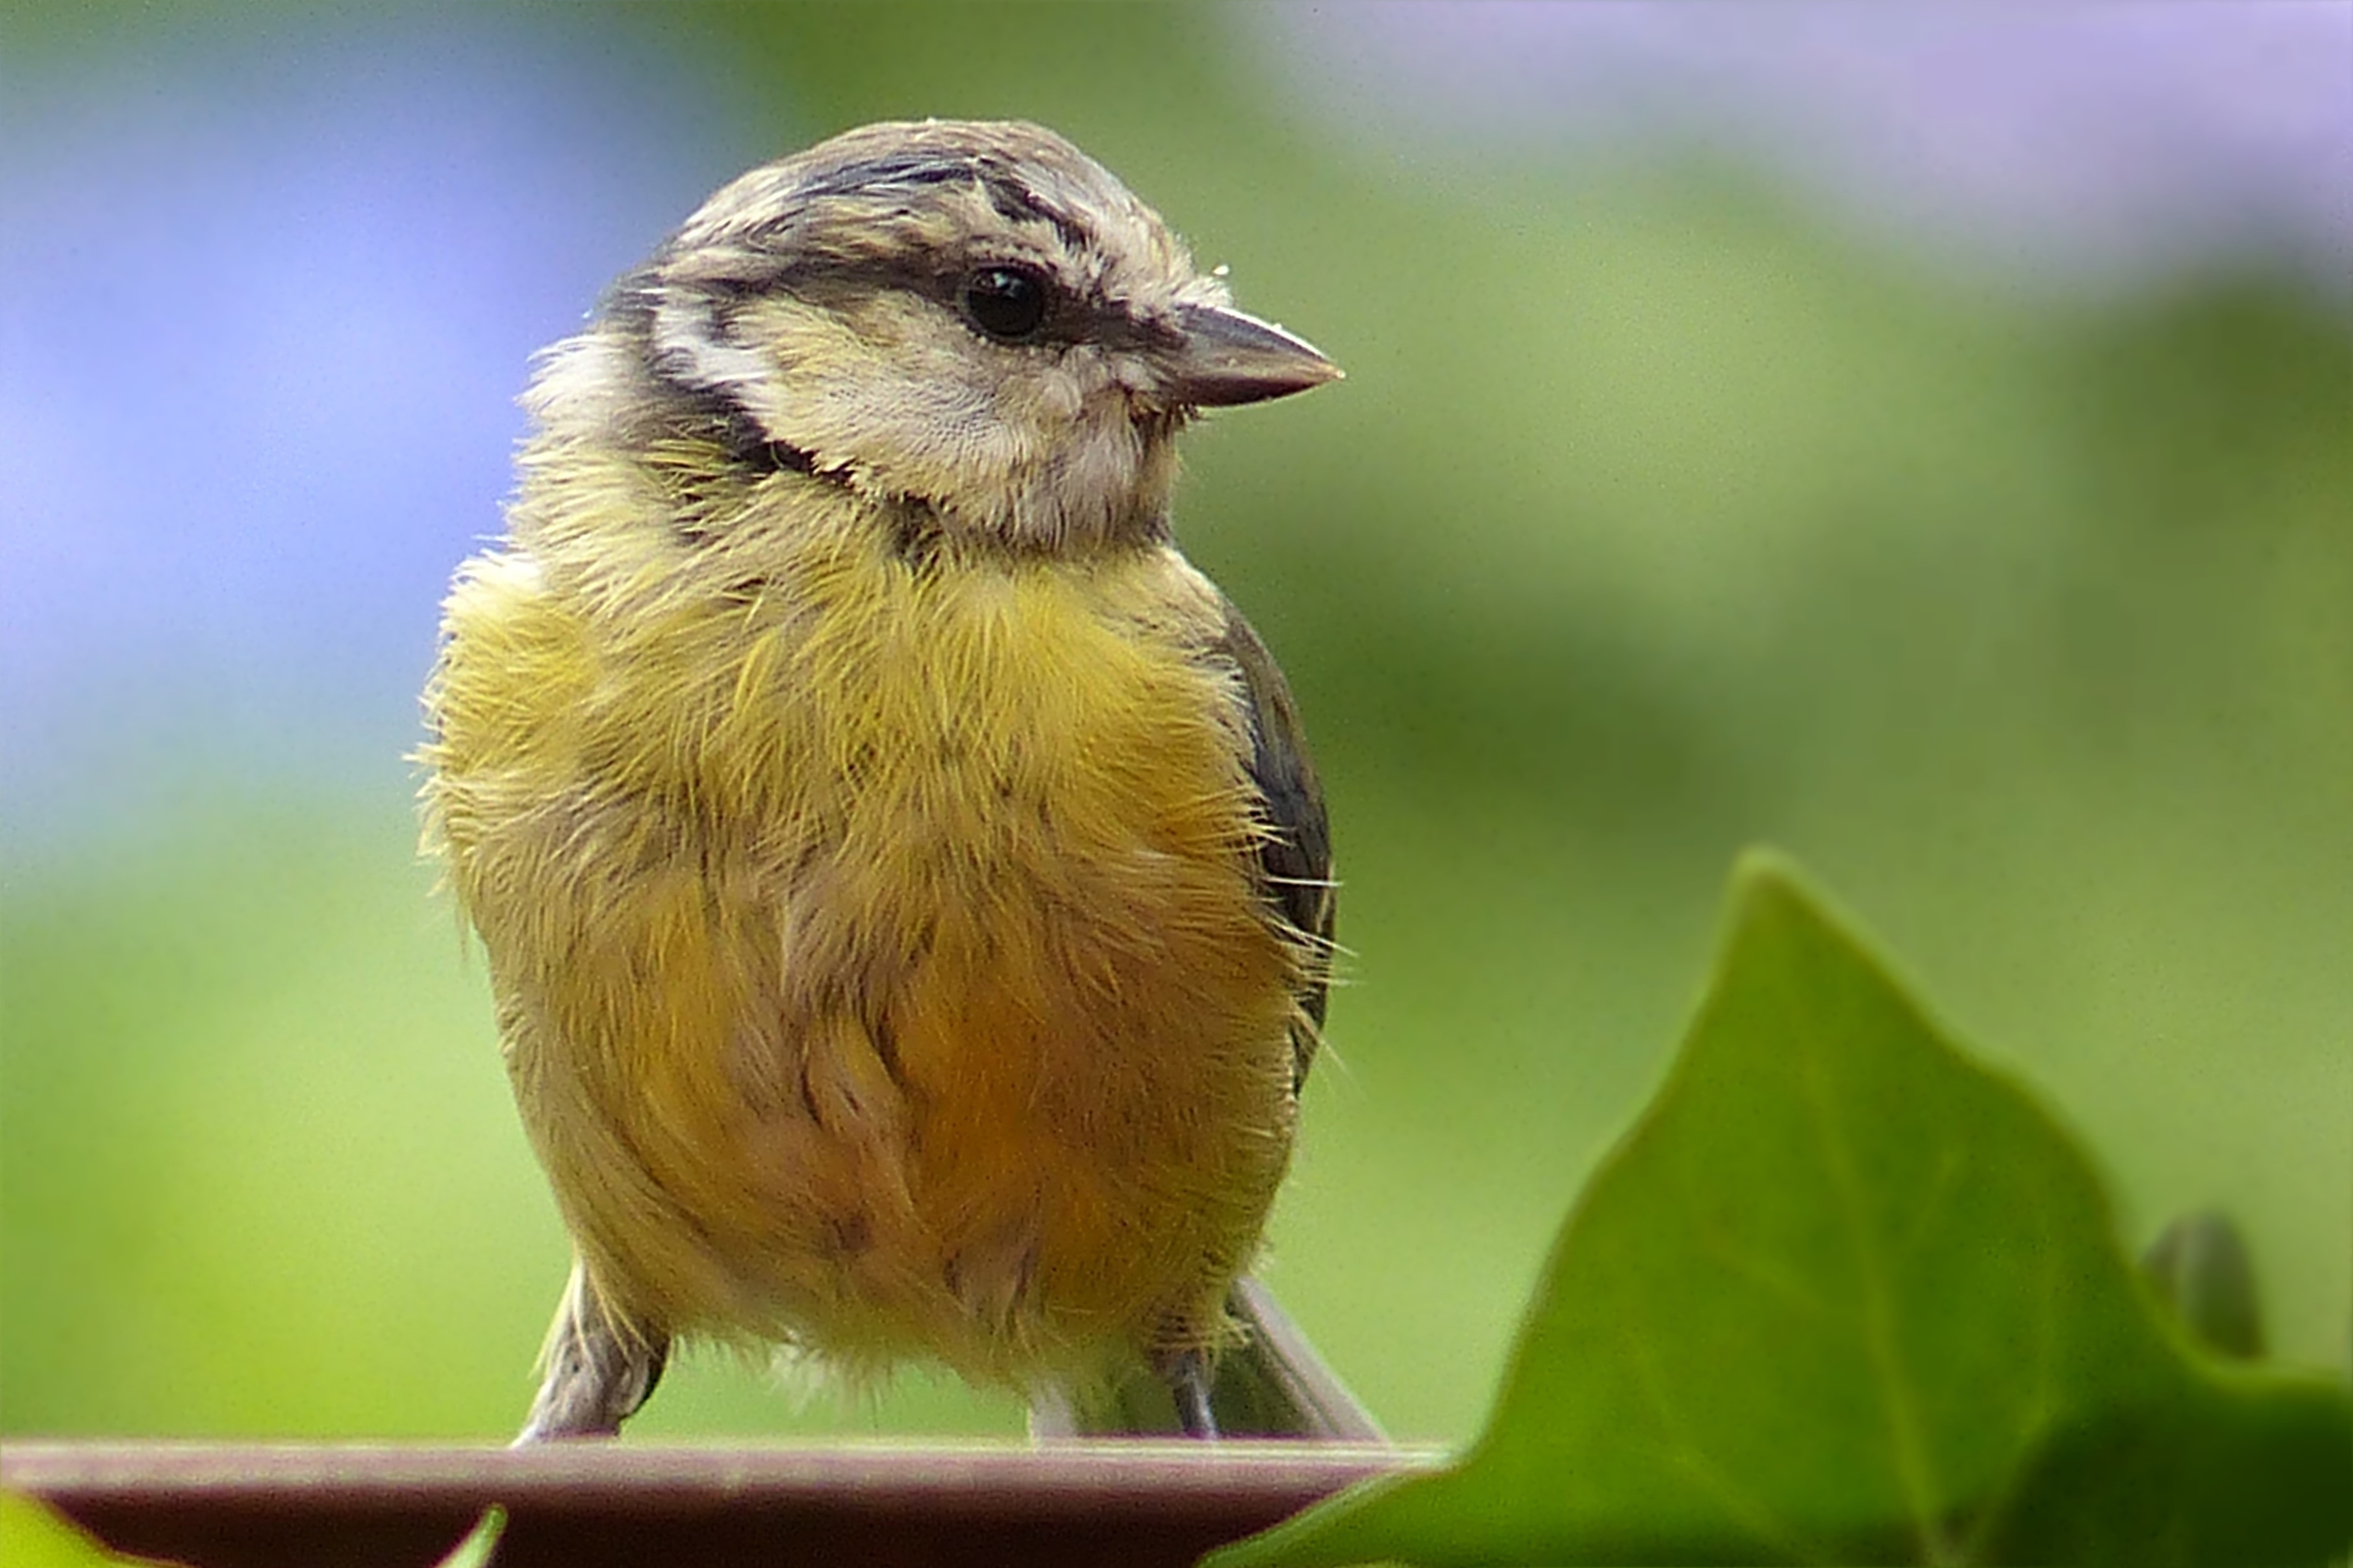 yellow and gray bird close up photo during daytime